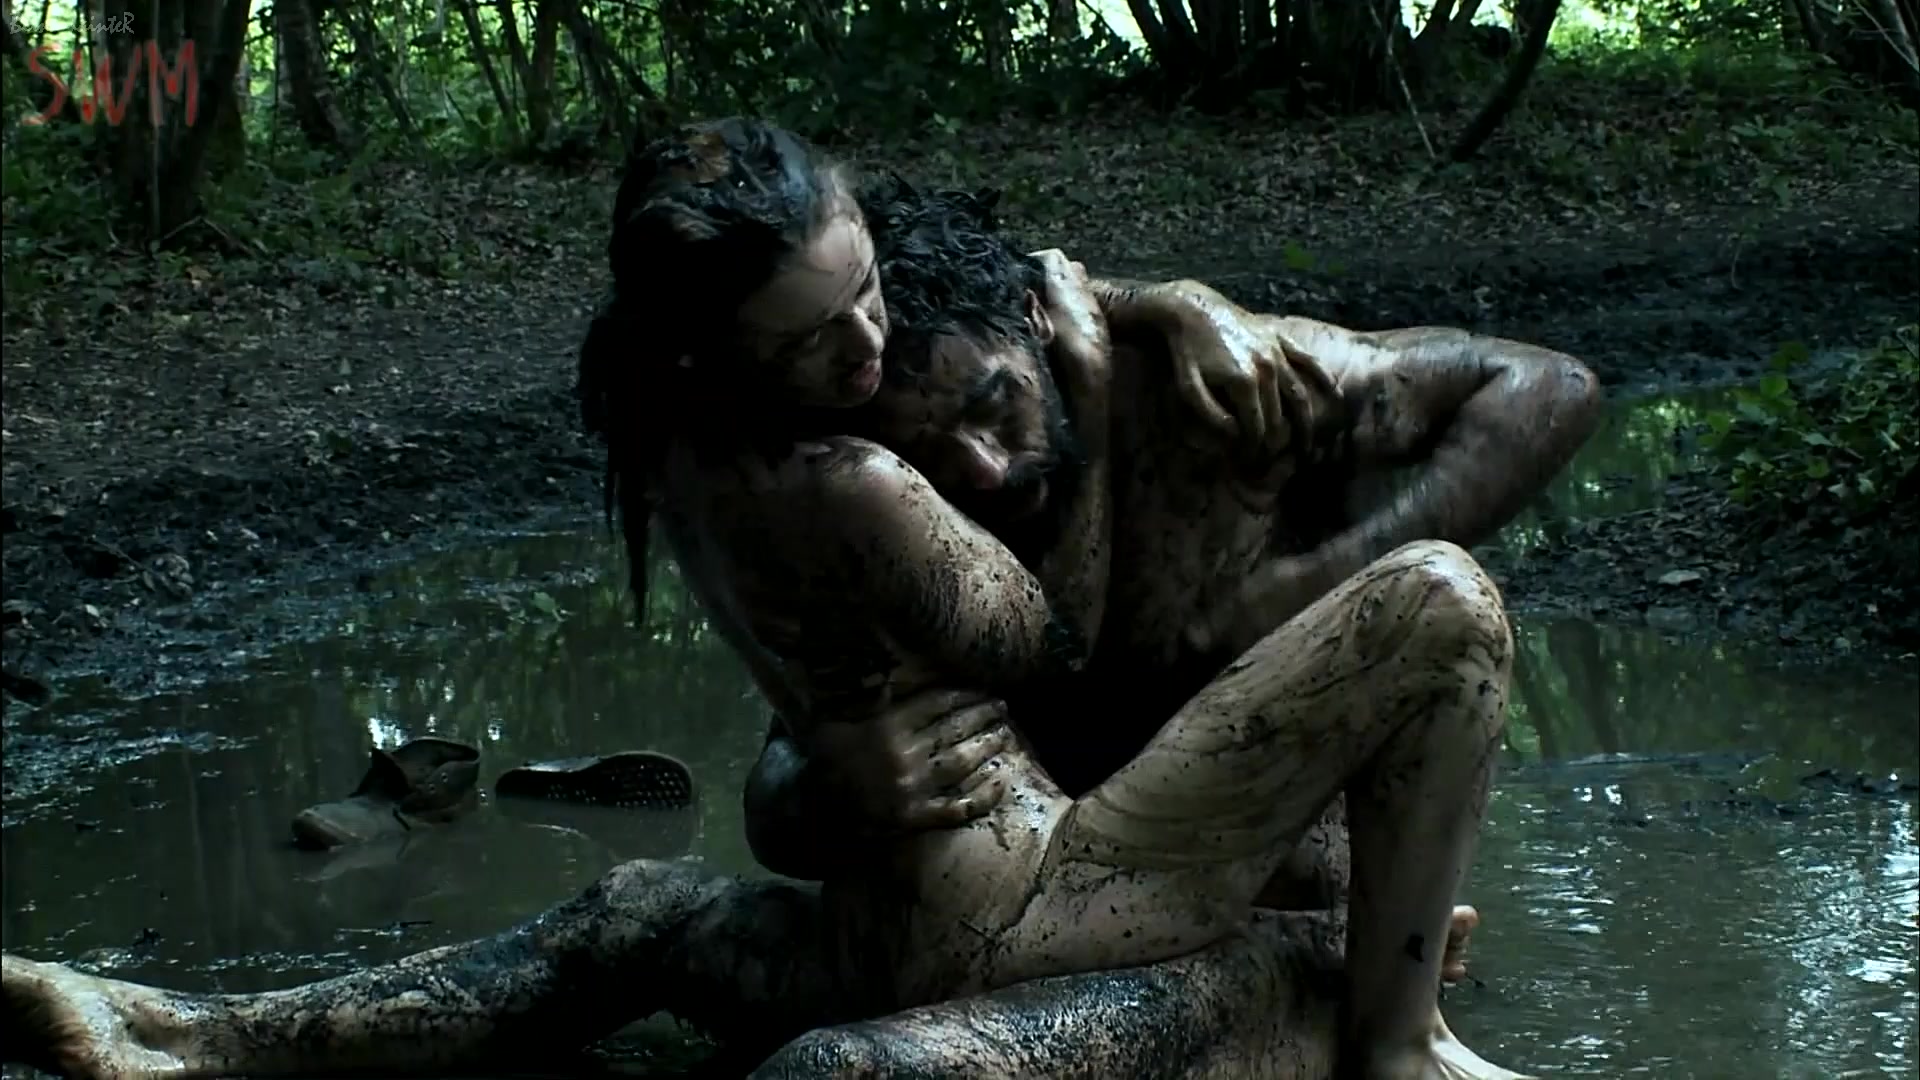 Desperate sex in a mud puddle in 2013's "Love Battles"